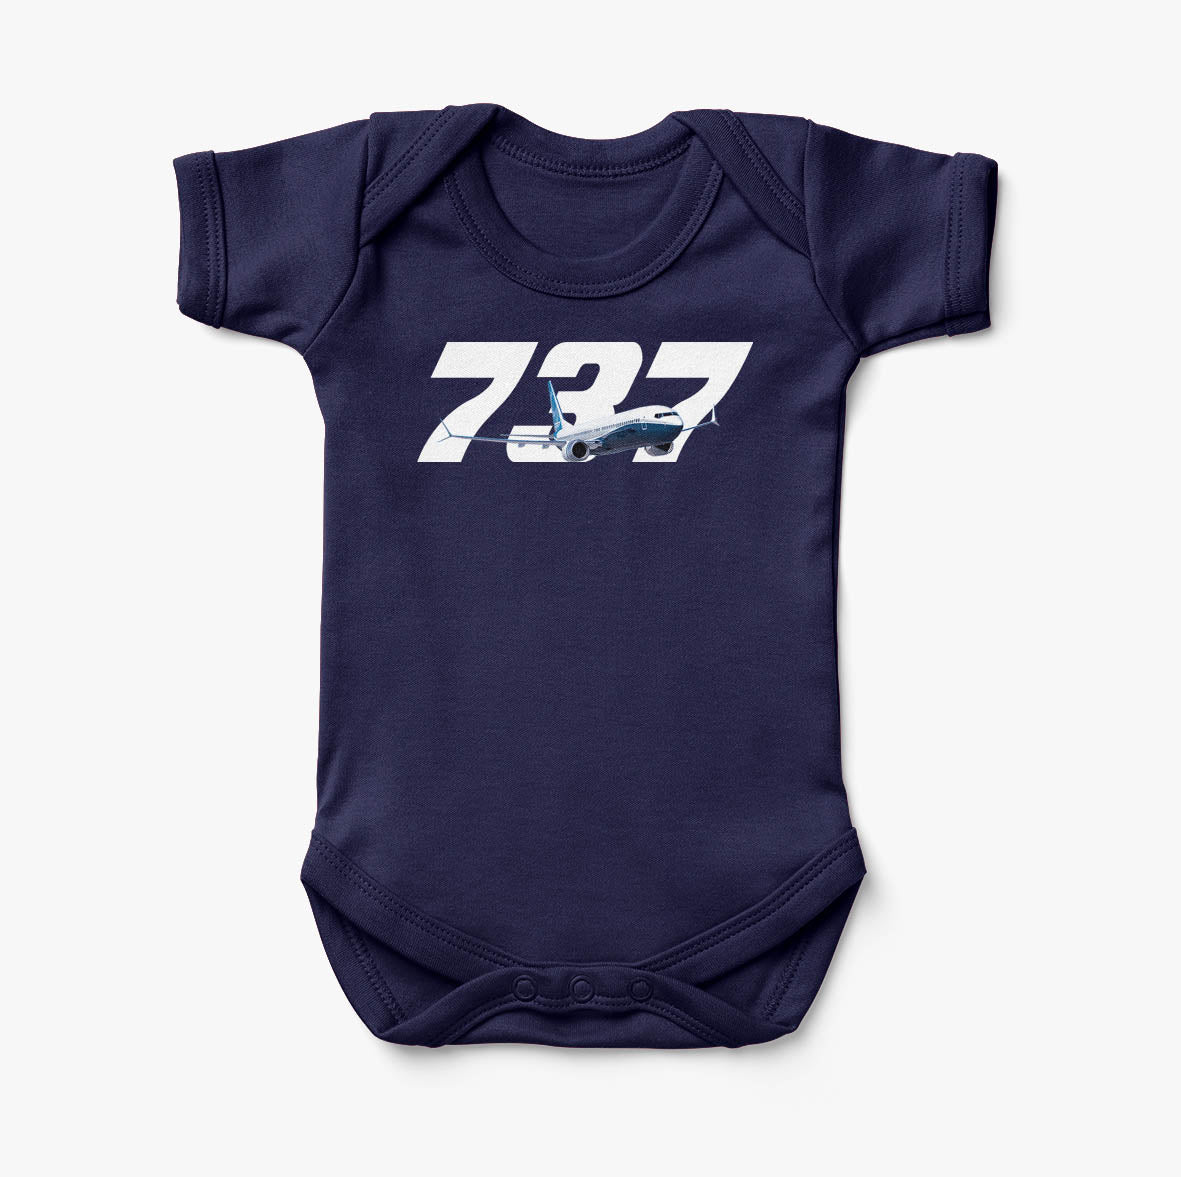 Super Boeing 737 Designed Baby Bodysuits